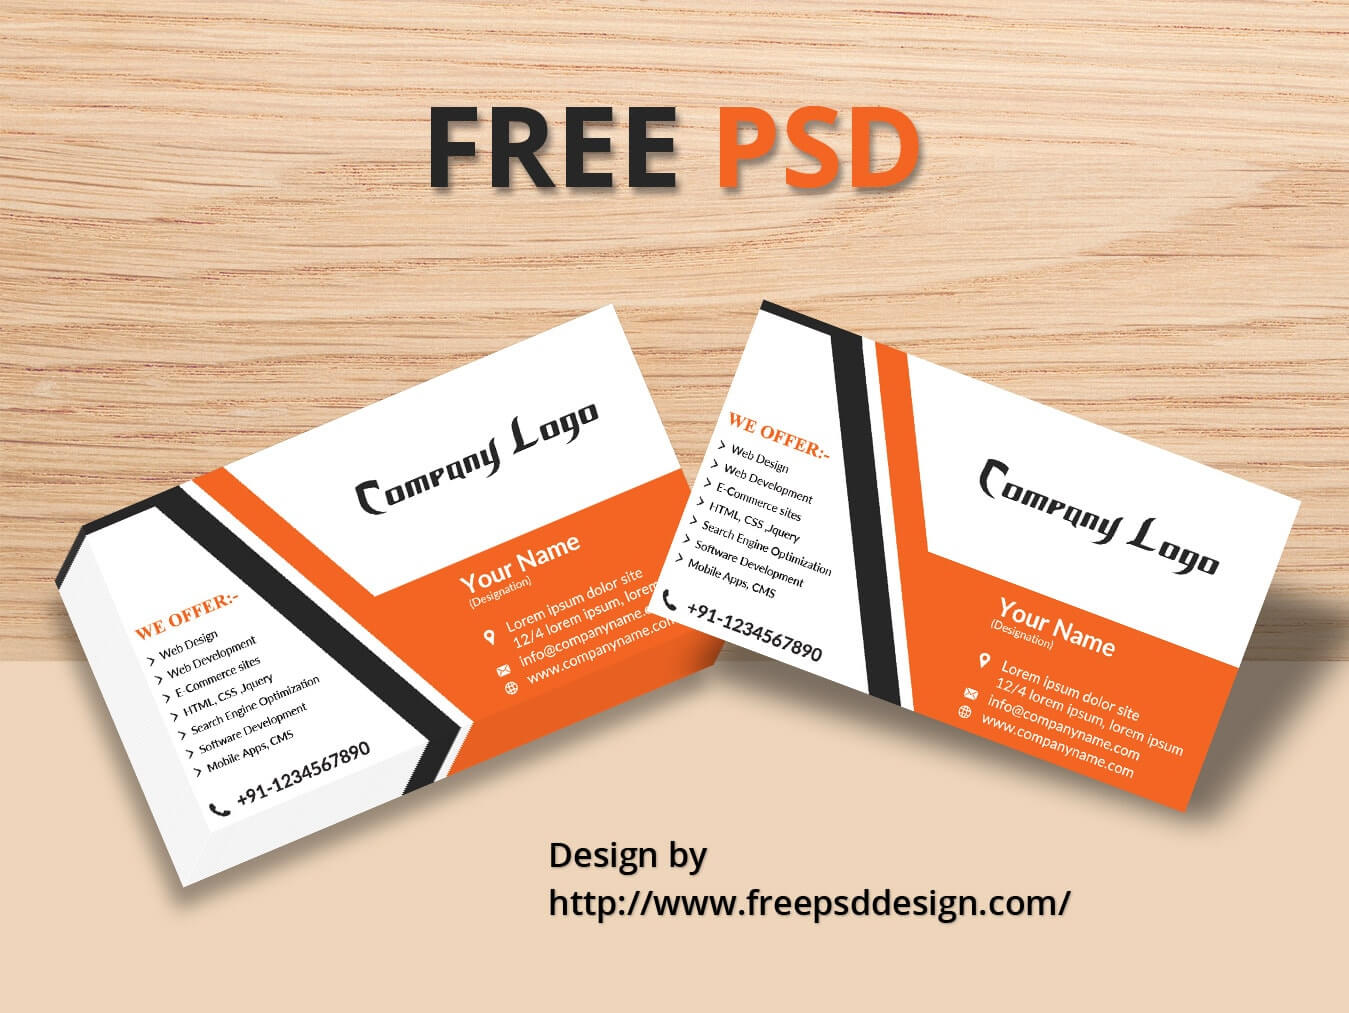 Doctor Visiting Card Design Psd Free Download – Yeppe Within Free Psd Visiting Card Templates Download